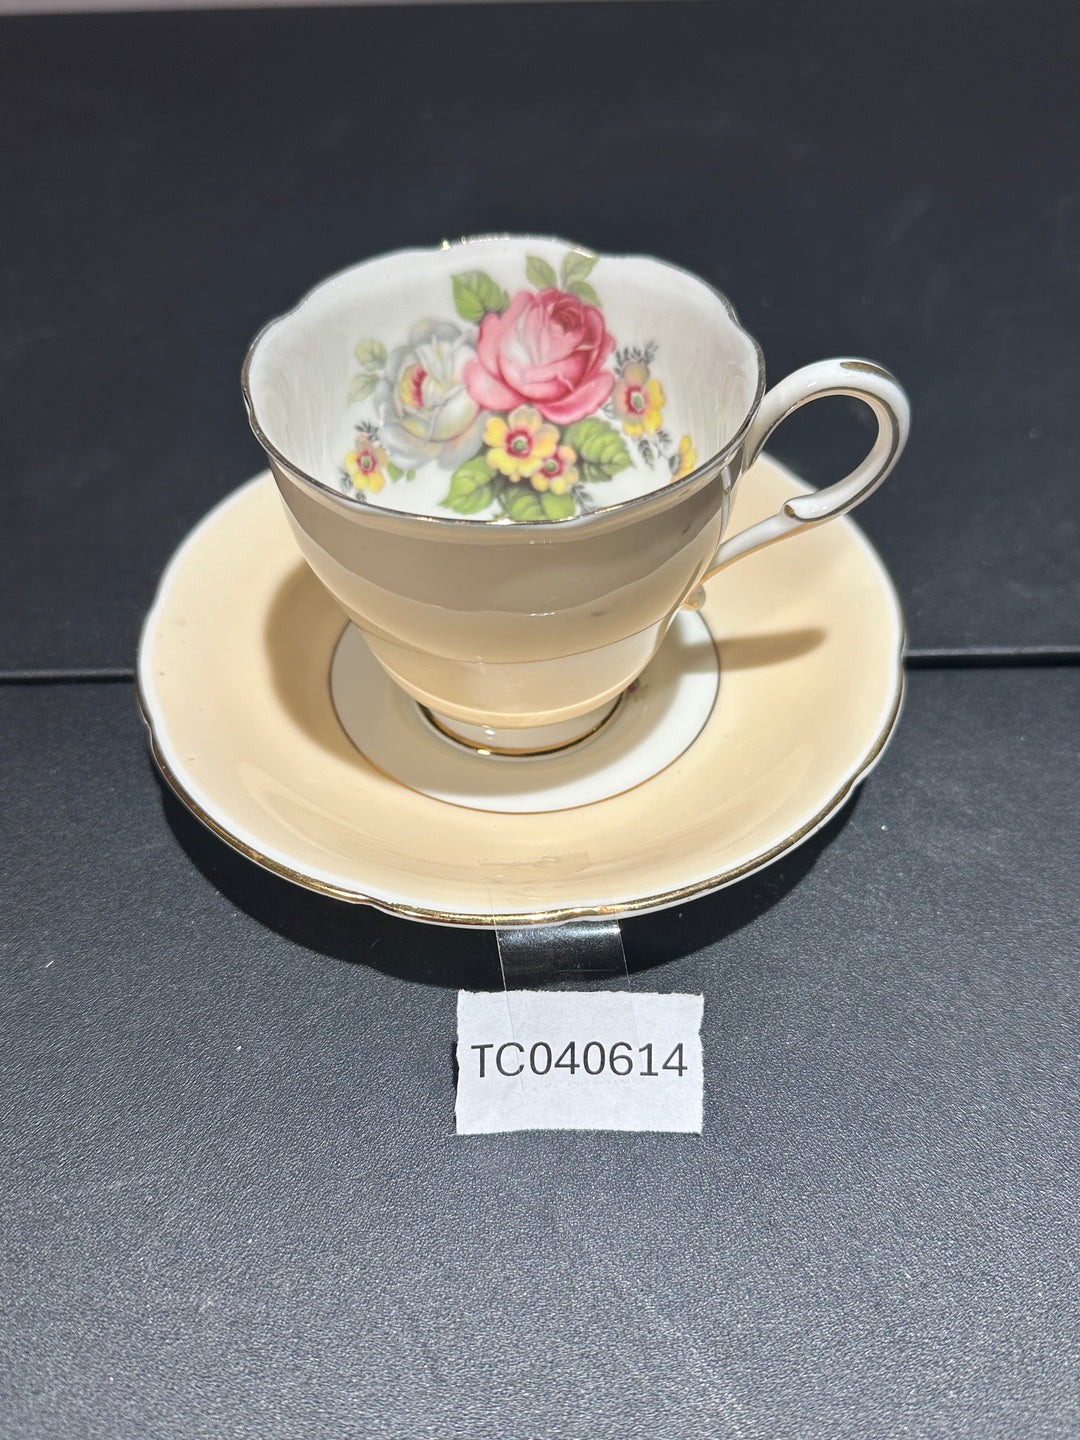 Tea Cup TC040614